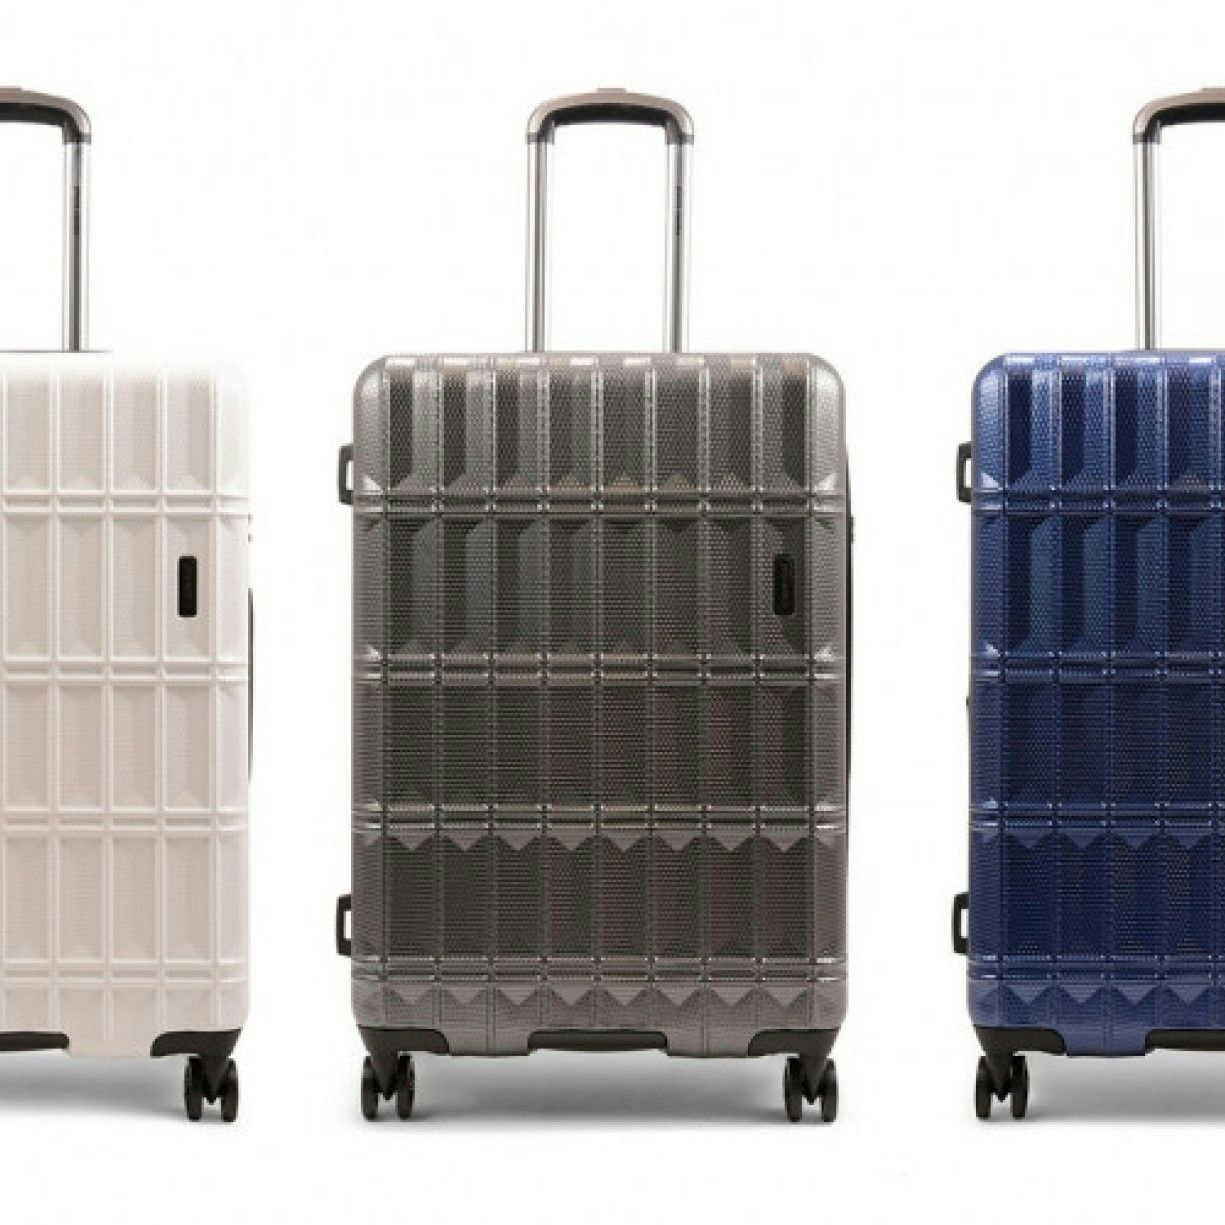 Introducing: Pierre Cardin Luggage